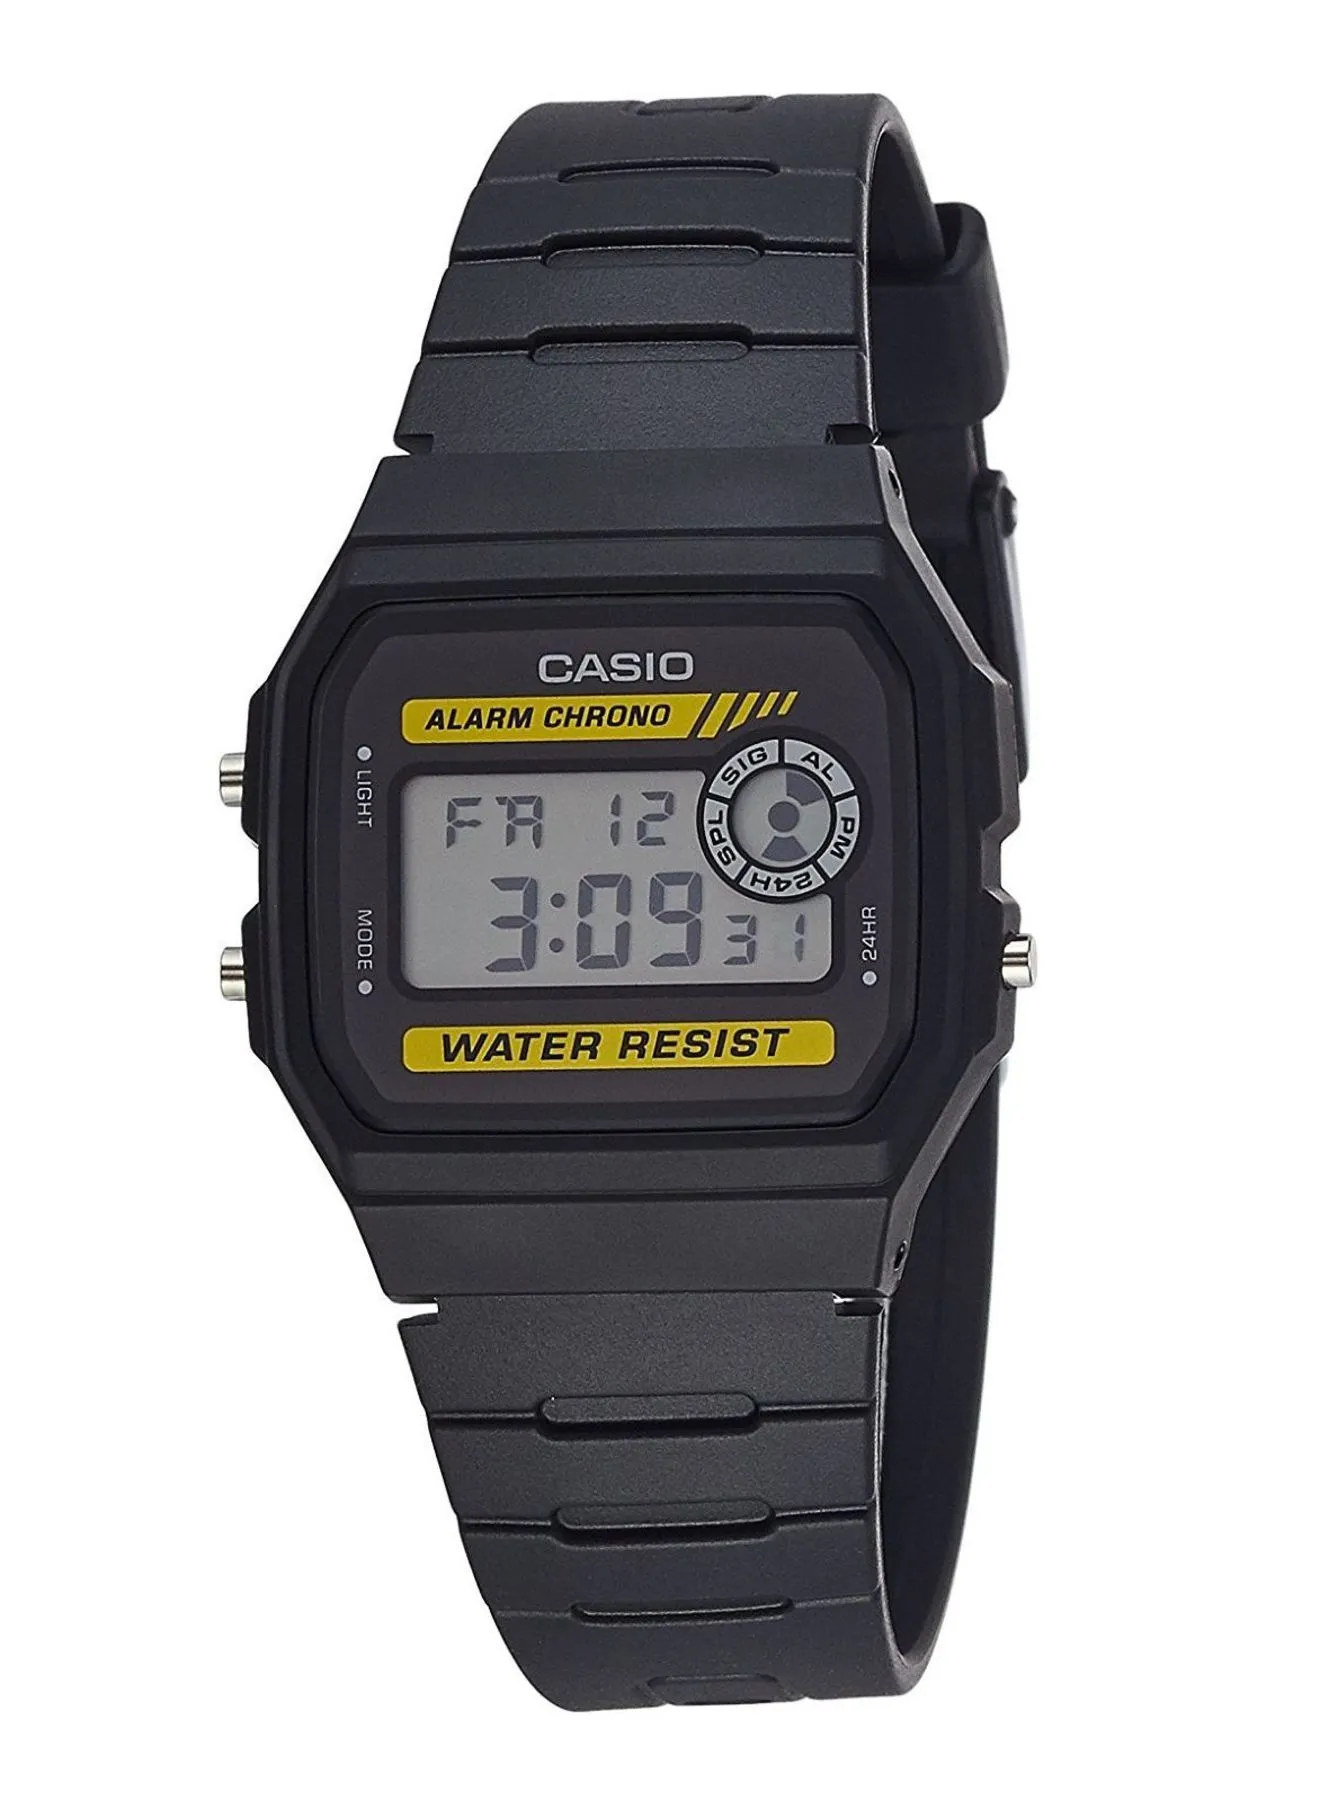 CASIO Men's Silicone Digital Wrist Watch F-94WA-9DG - 40 mm - Black